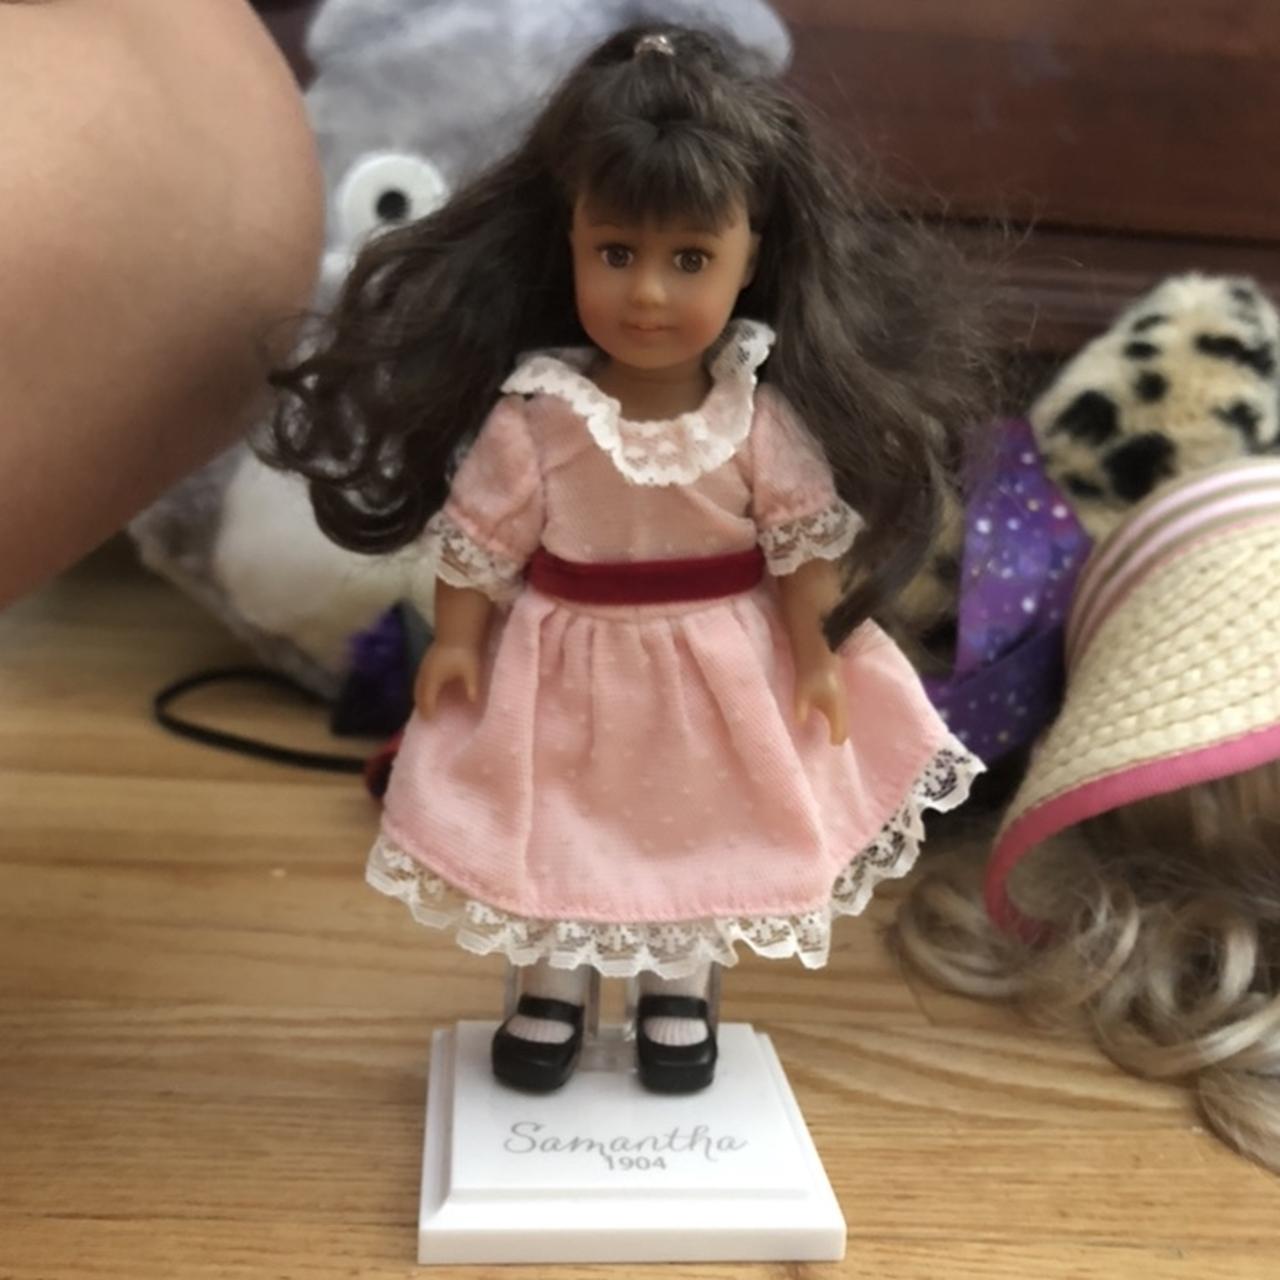 Samantha Mini Doll & Book | Beforever | American Girl